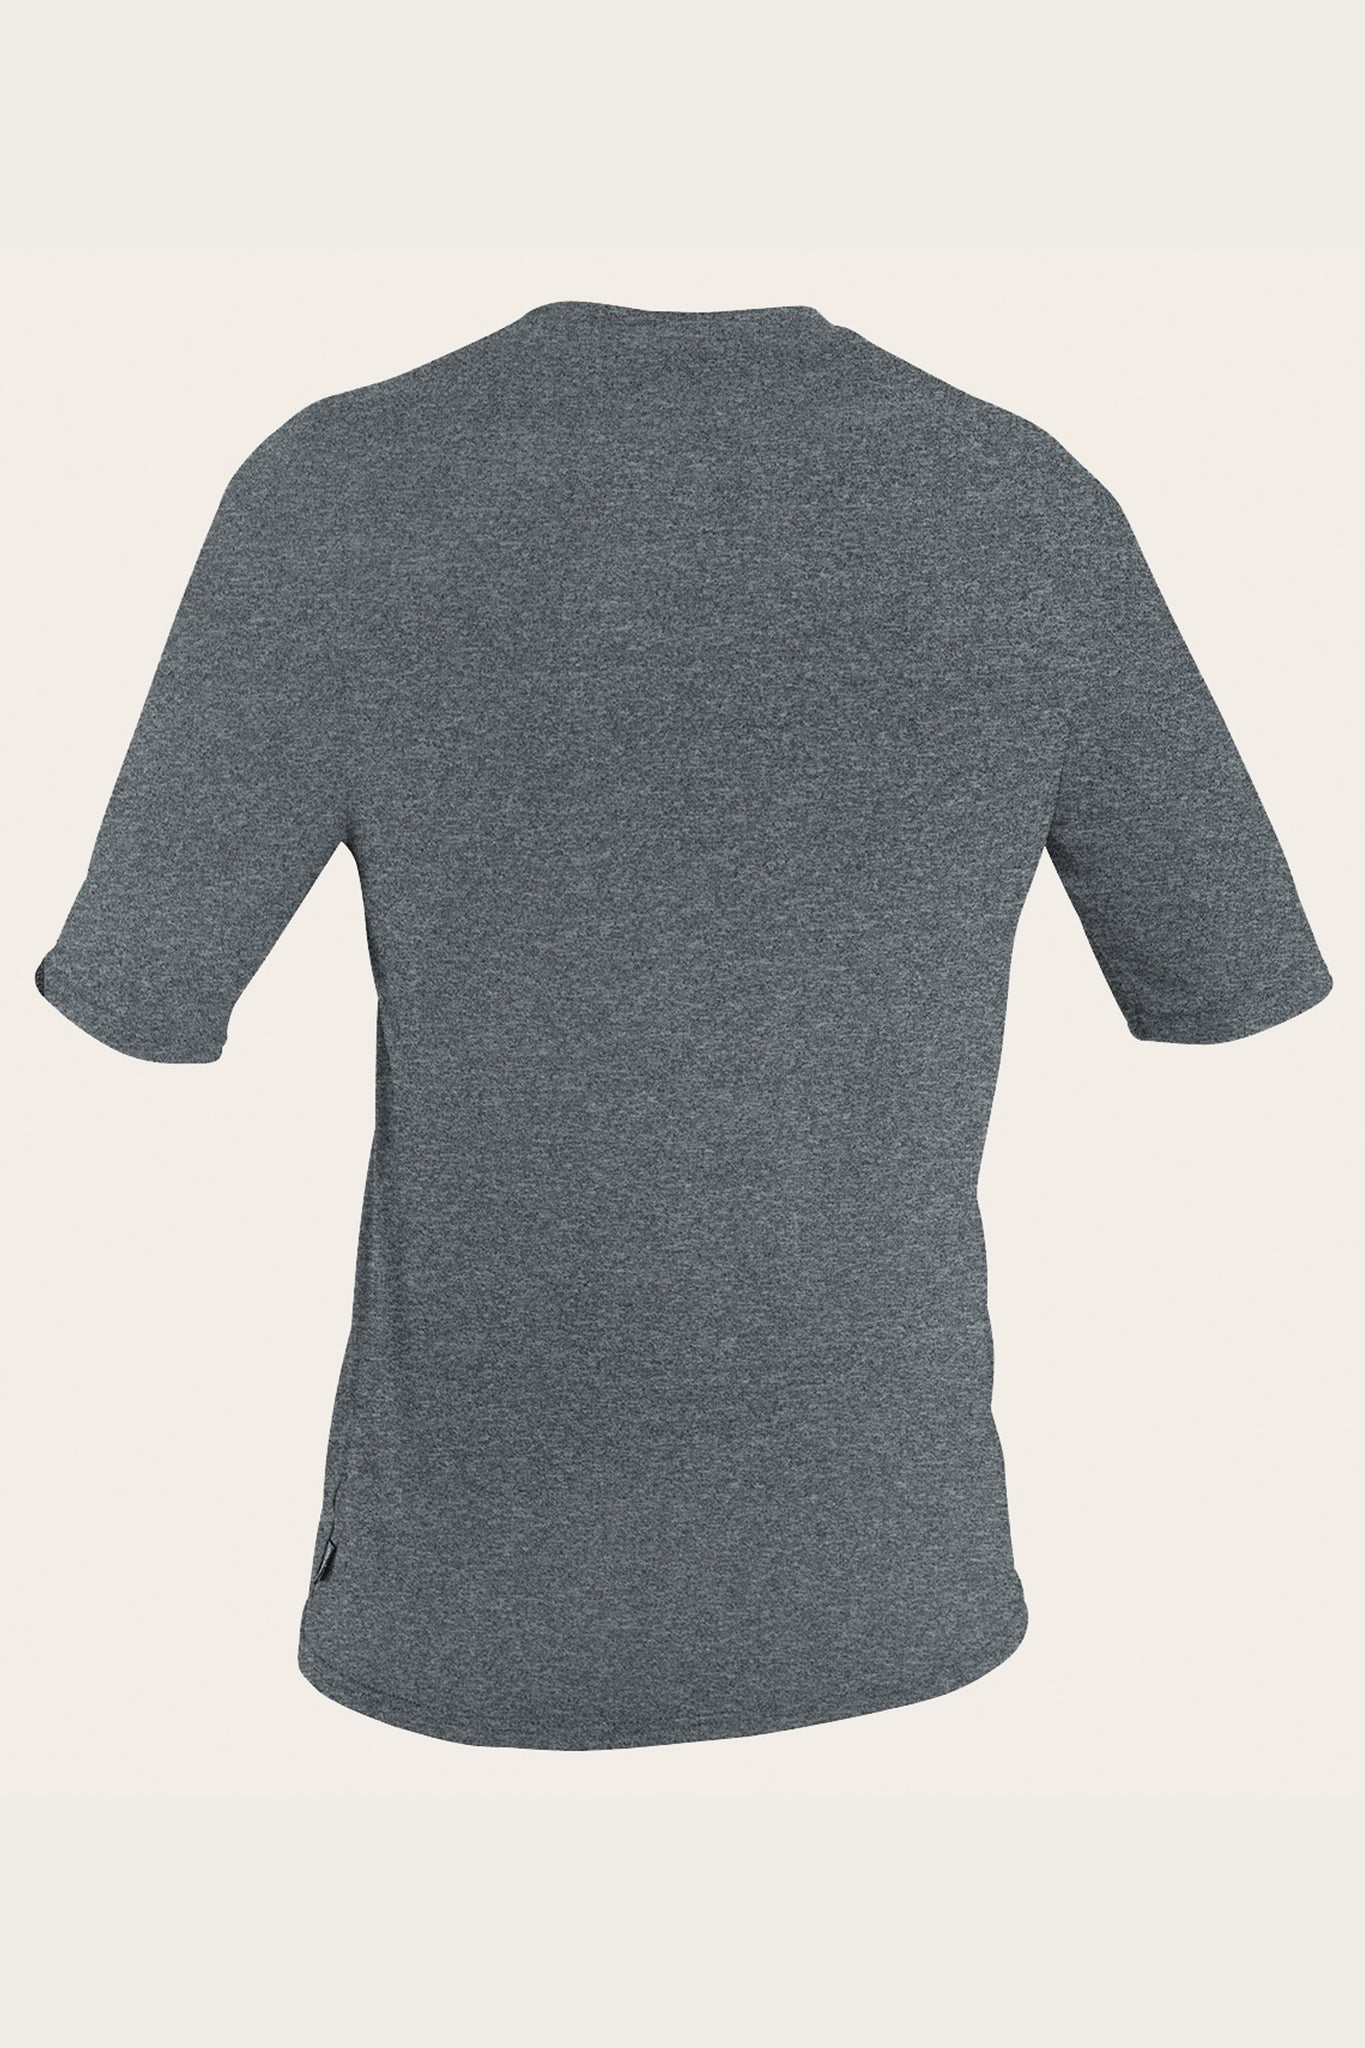 Youth Hybrid S/S Sun Shirt - Cool Grey | O'Neill